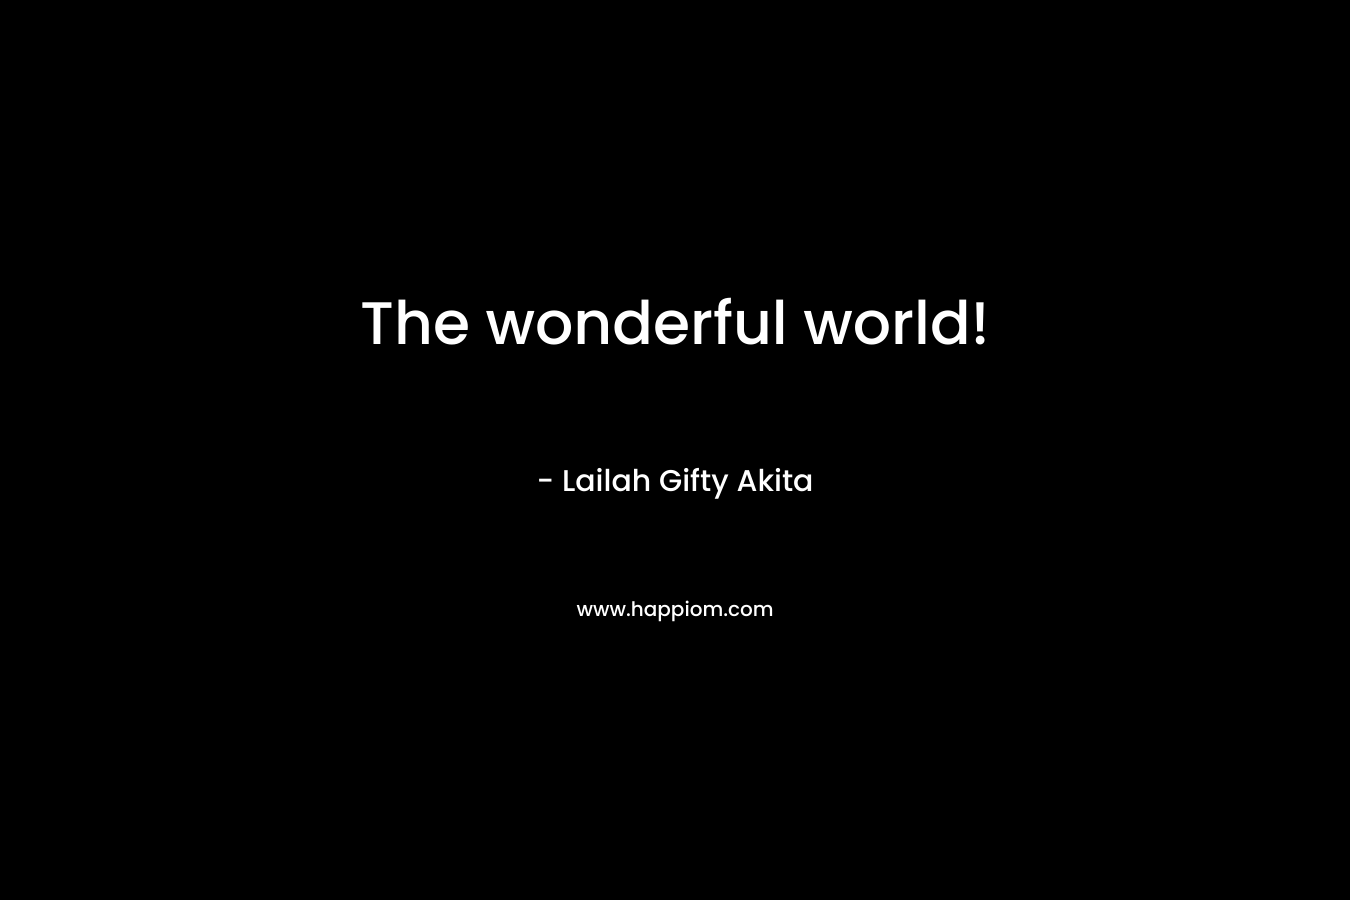 The wonderful world!